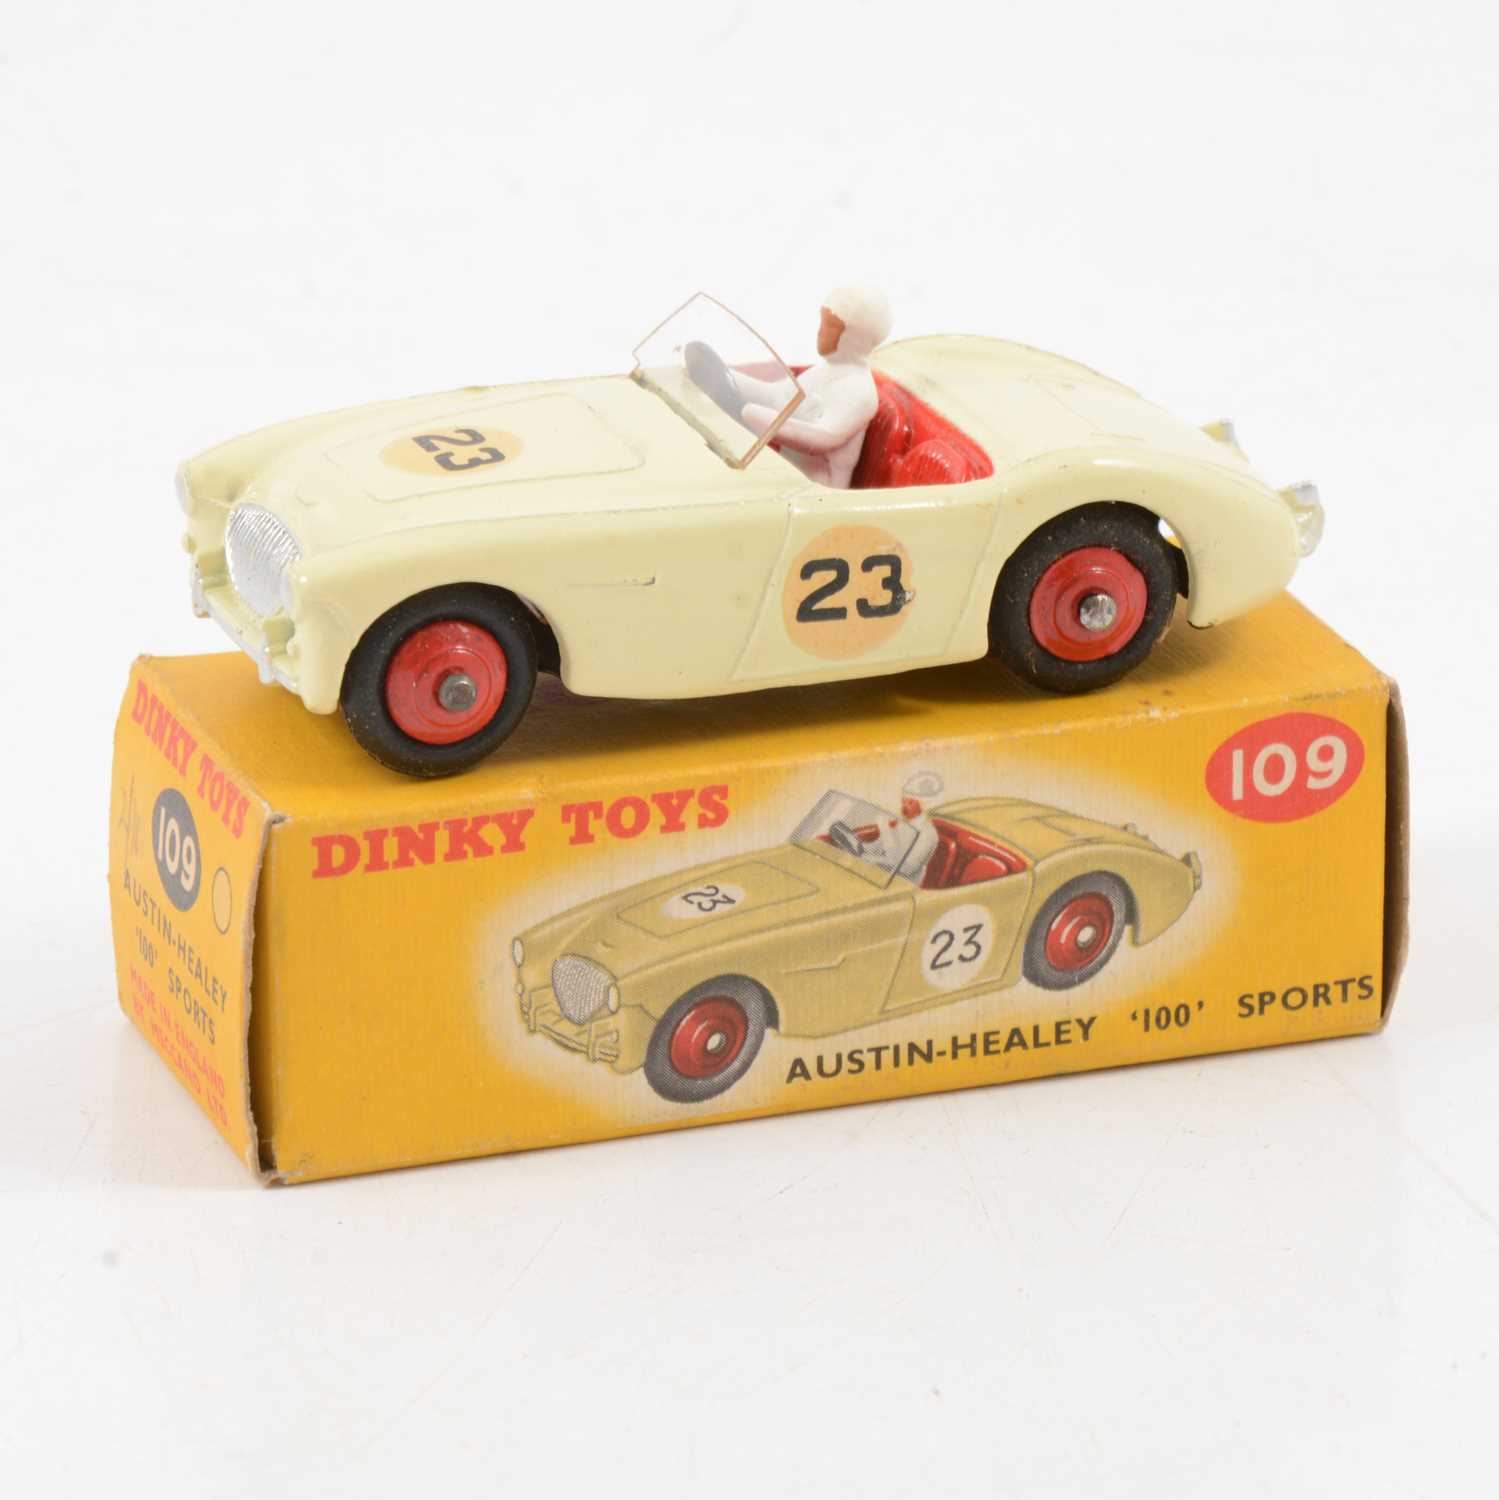 Lot 118 - Dinky Toys die-cast model no.109 Austin Healey 100 Sports car